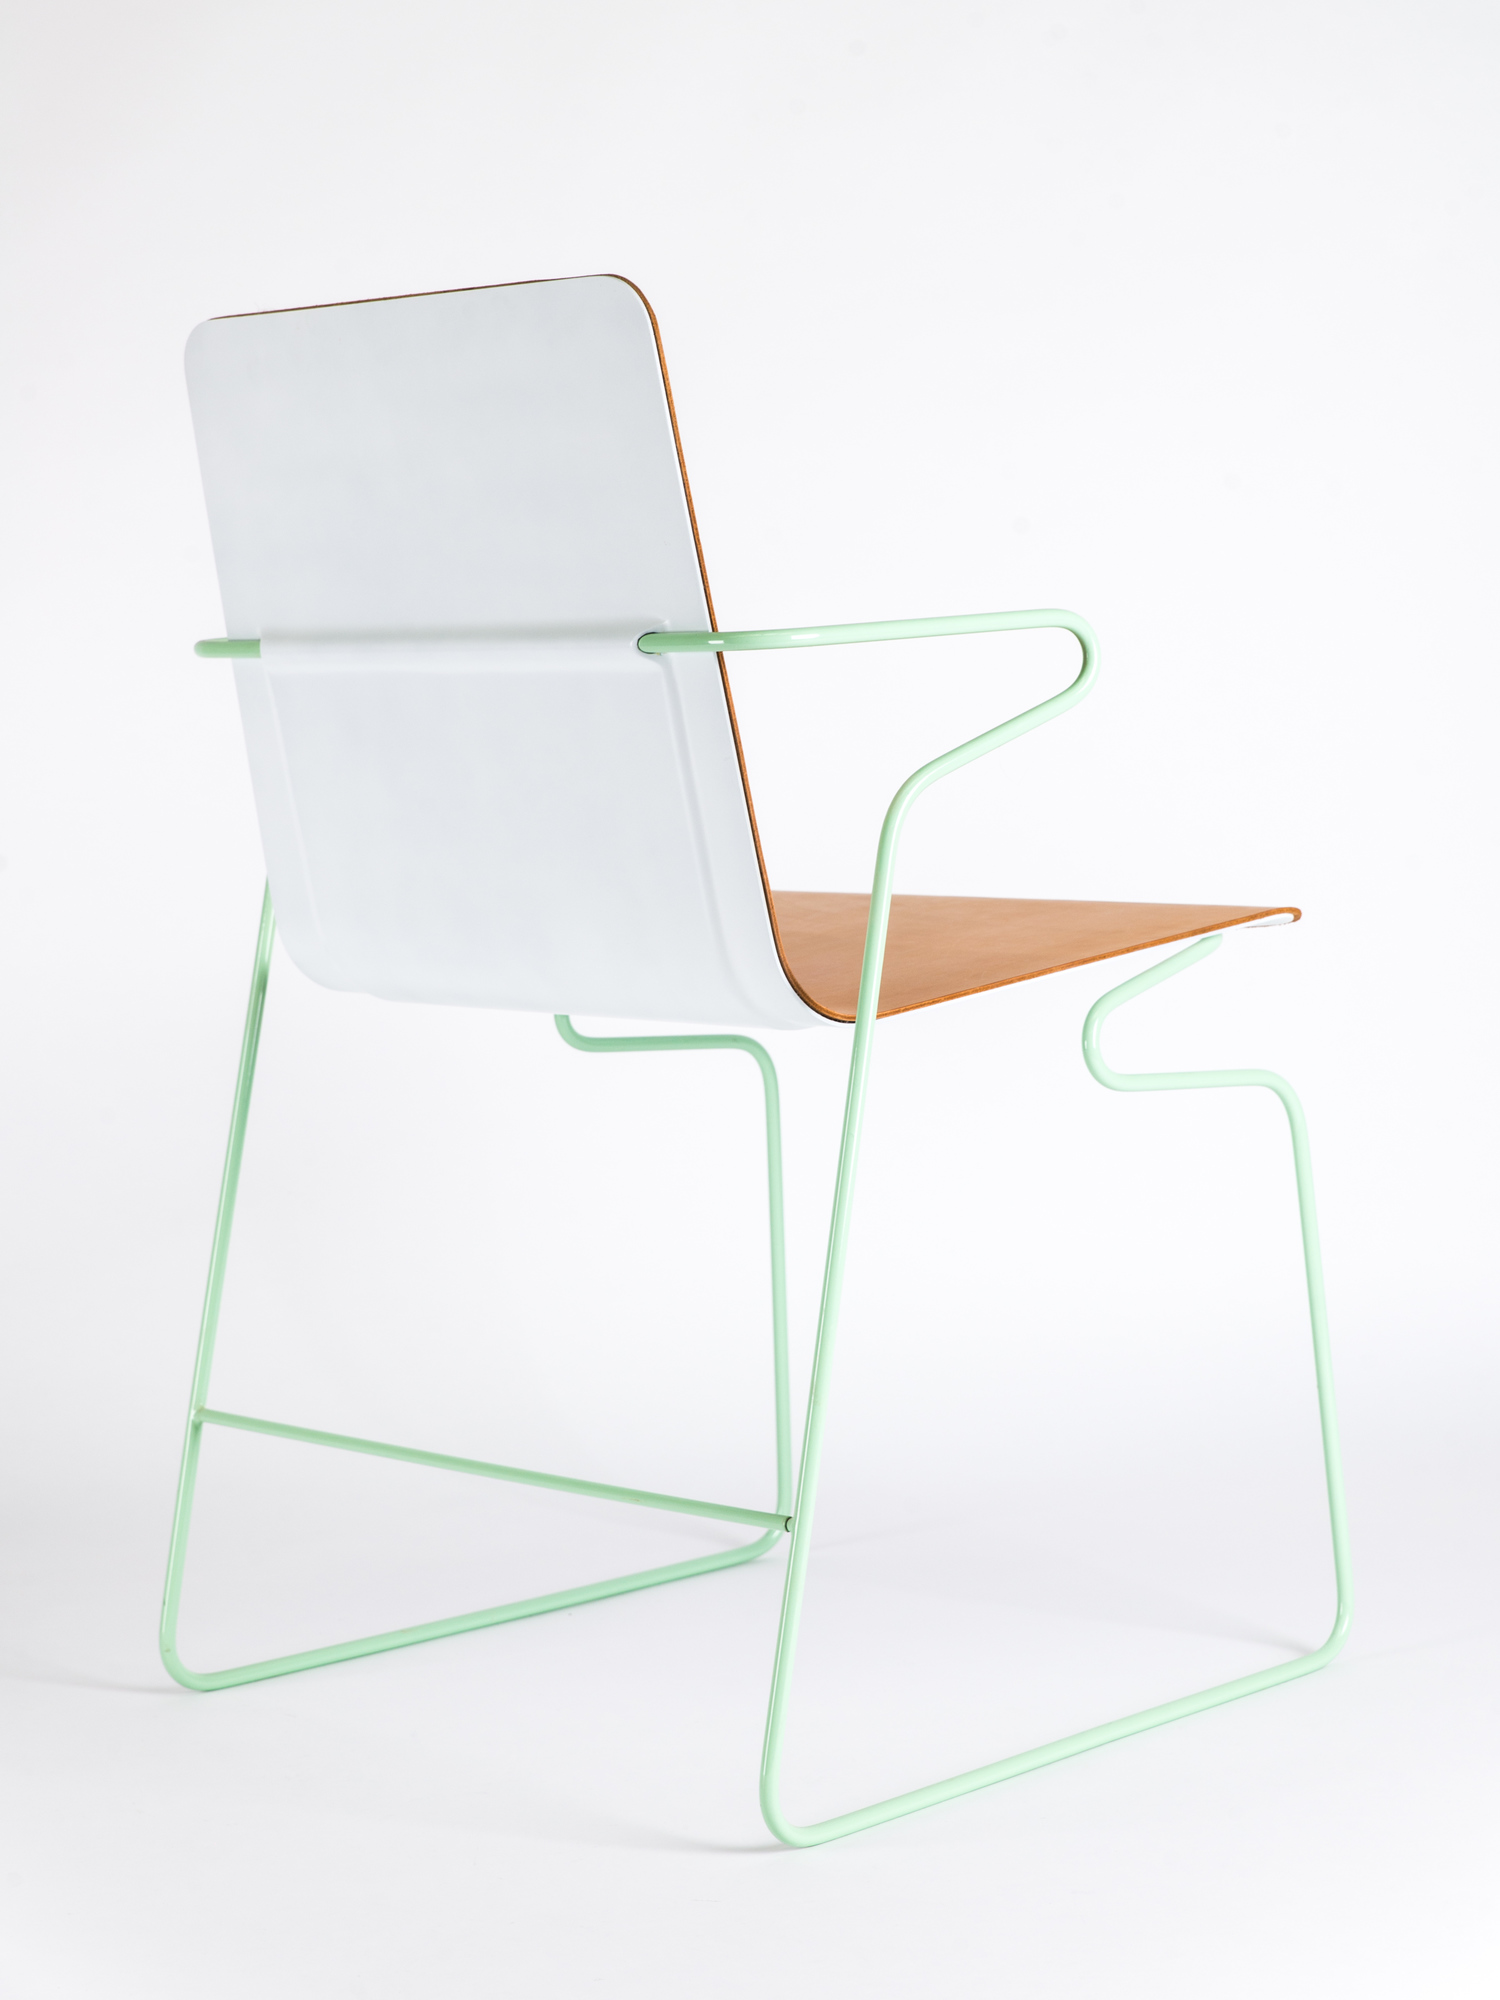 Bender Chair / Frederik Kurzweg Design Studio (4)